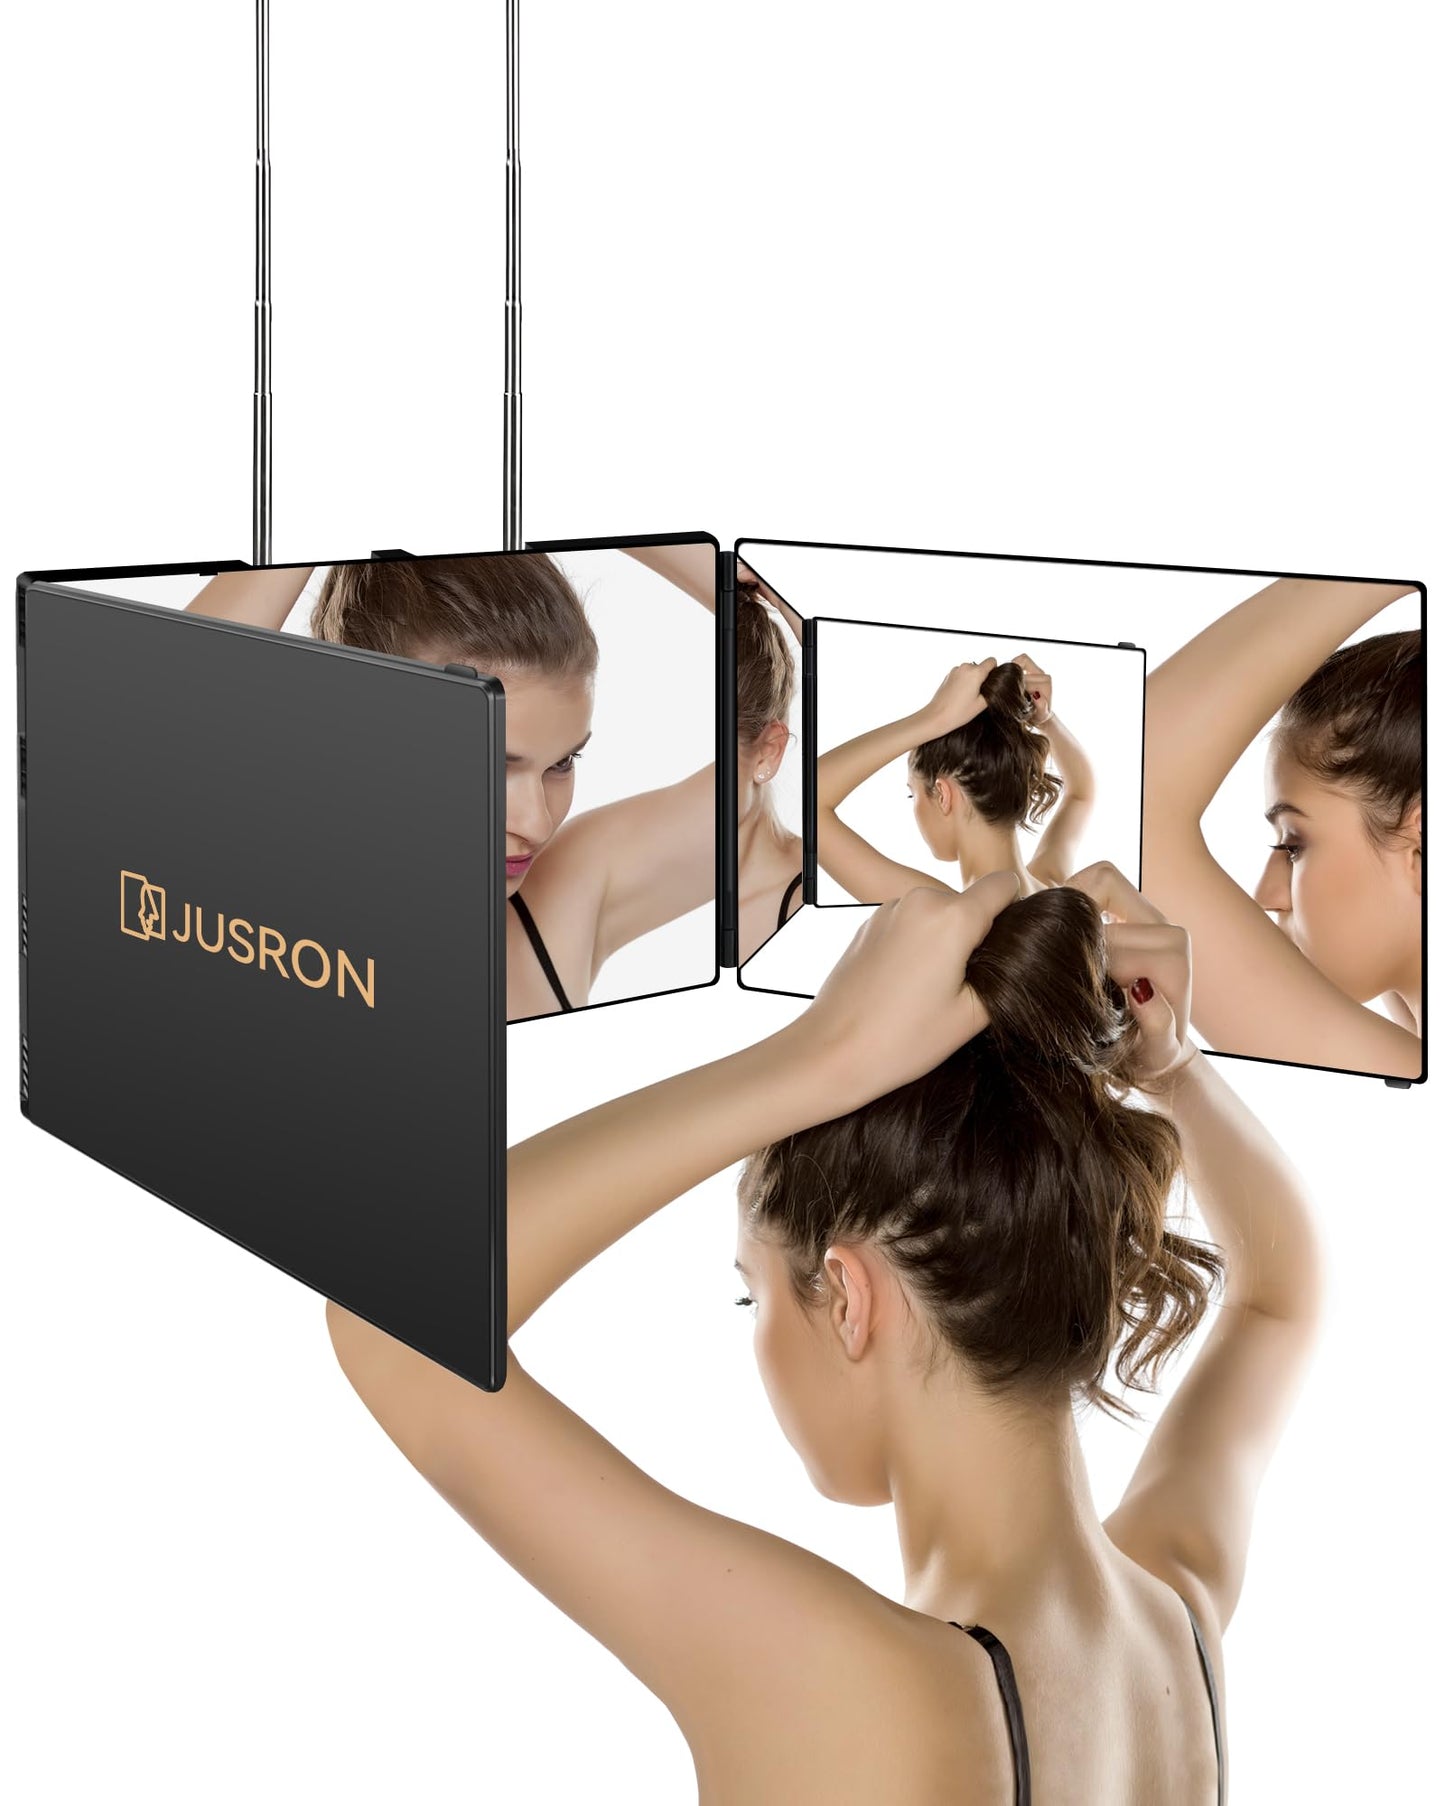 JUSRON 3 Way Mirror for Self Hair Cutting 360 Viewing Angle Self Hair Cutting Mirror, Clear Anti-Fog HD Glass